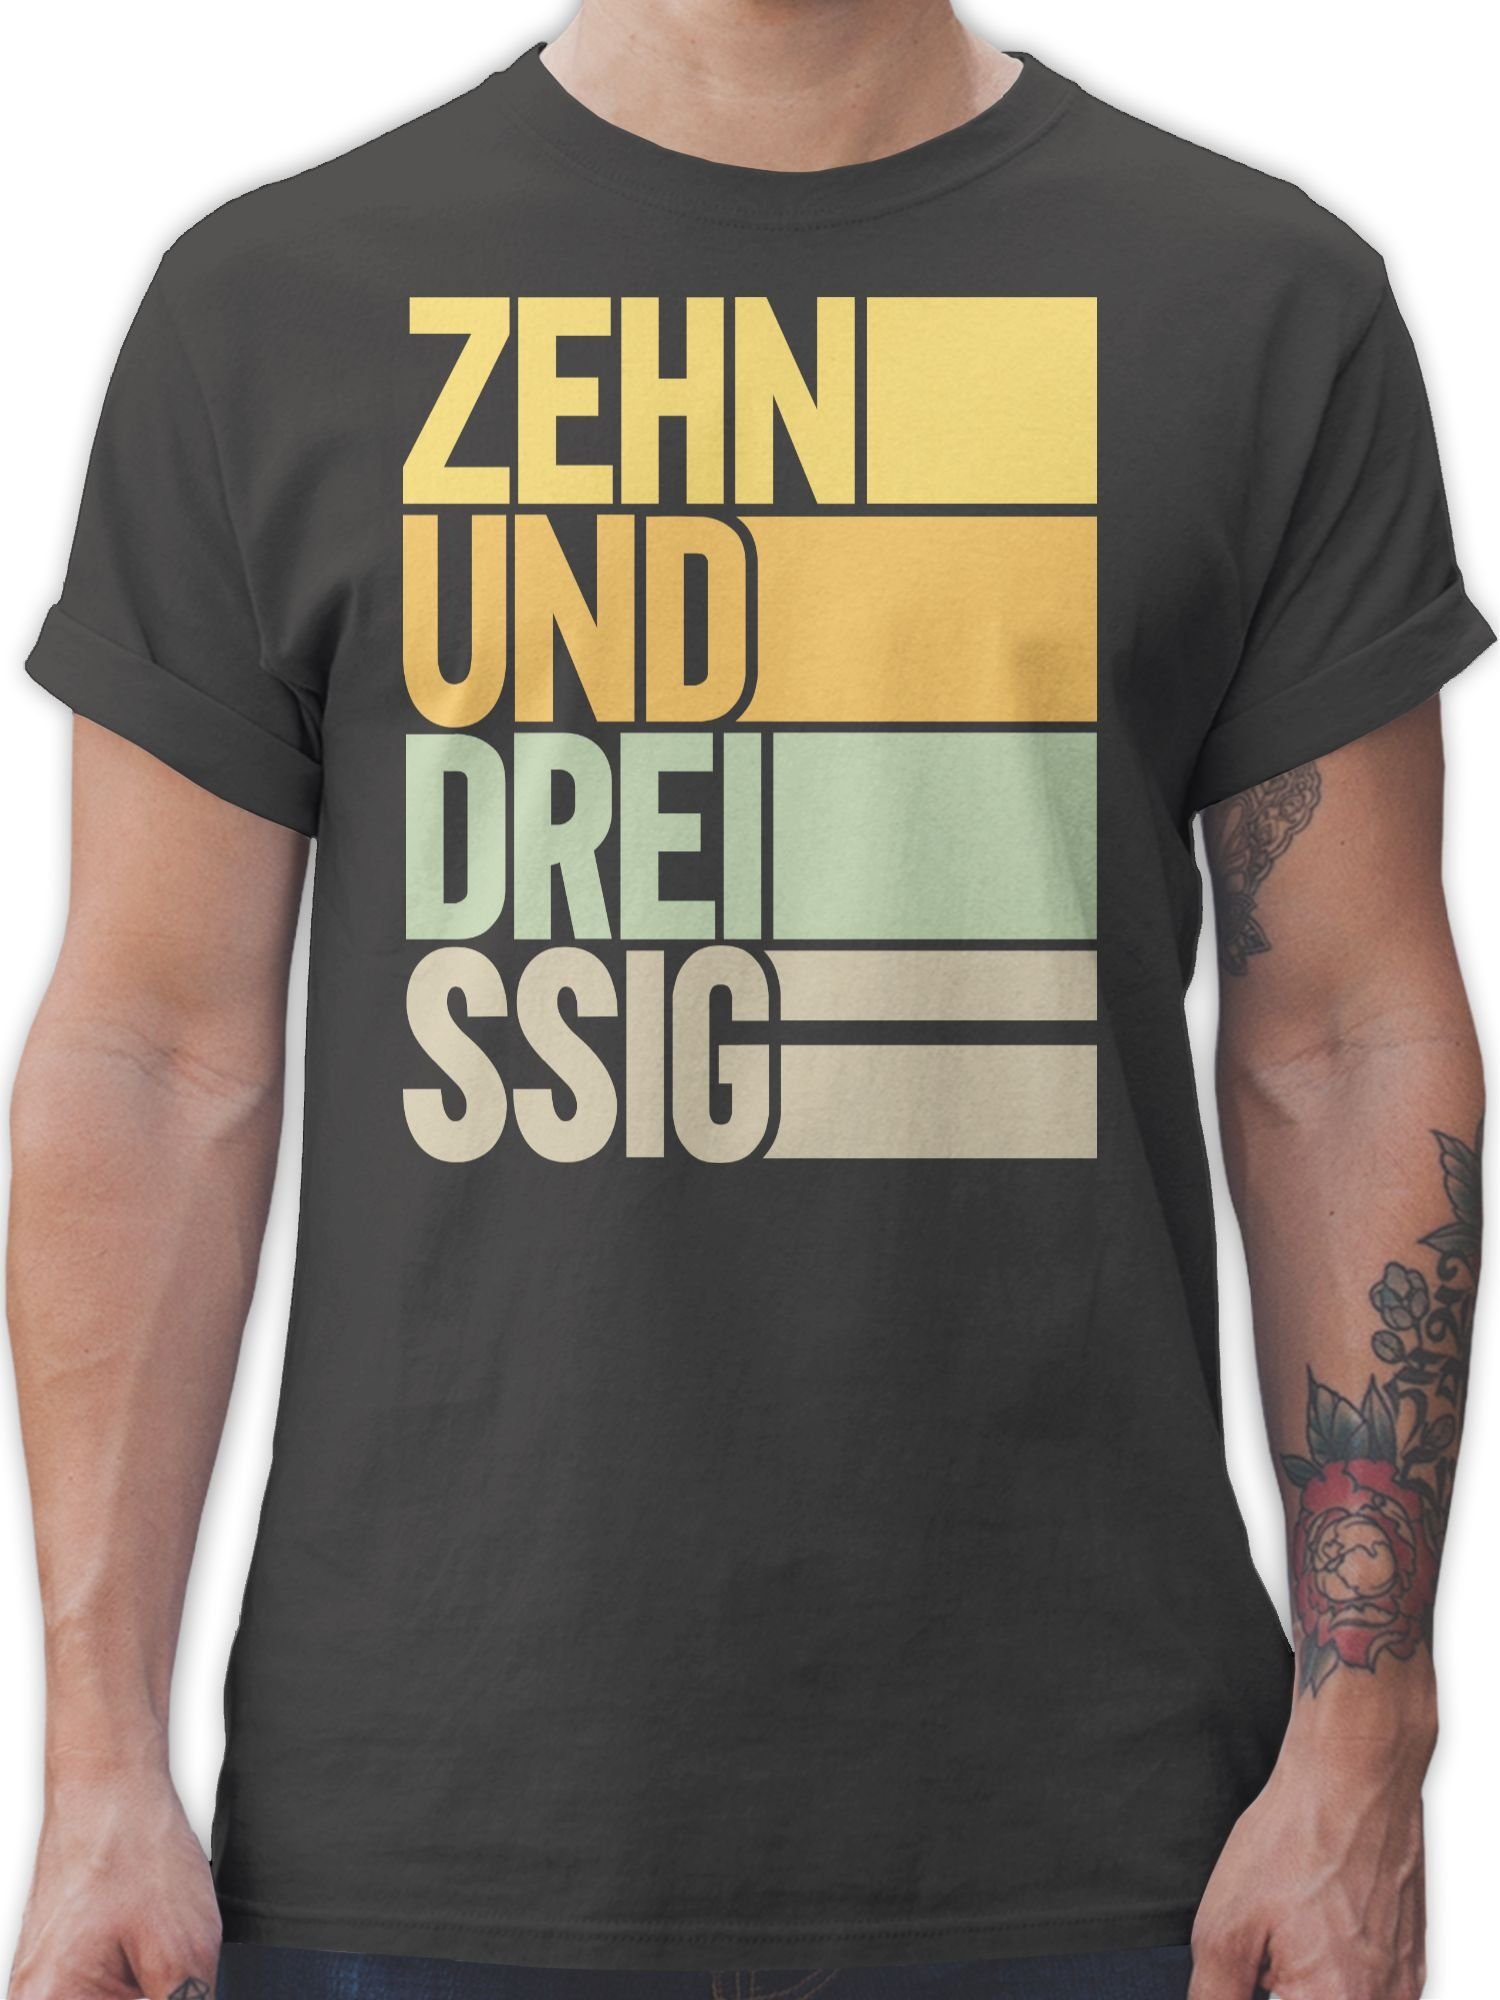 Top-App Shirtracer T-Shirt Dunkelgrau Zehnunddreissig 40. 02 Geburtstag